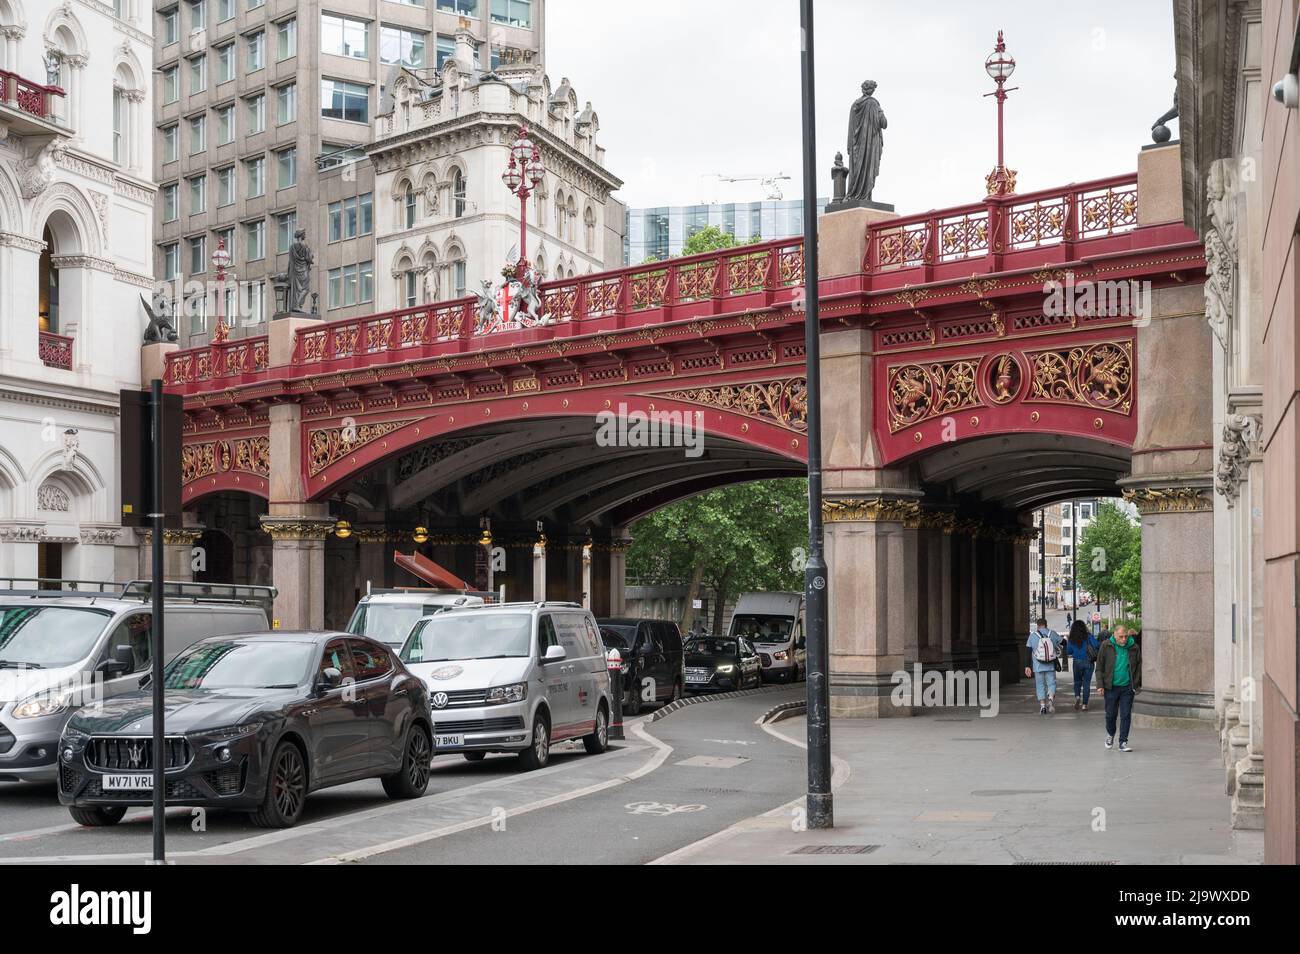 Road traffic passes under Holborn Viaduct, an ornate cast iron road bridge crossing Farringdon Street. London, England, UK. Stock Photo